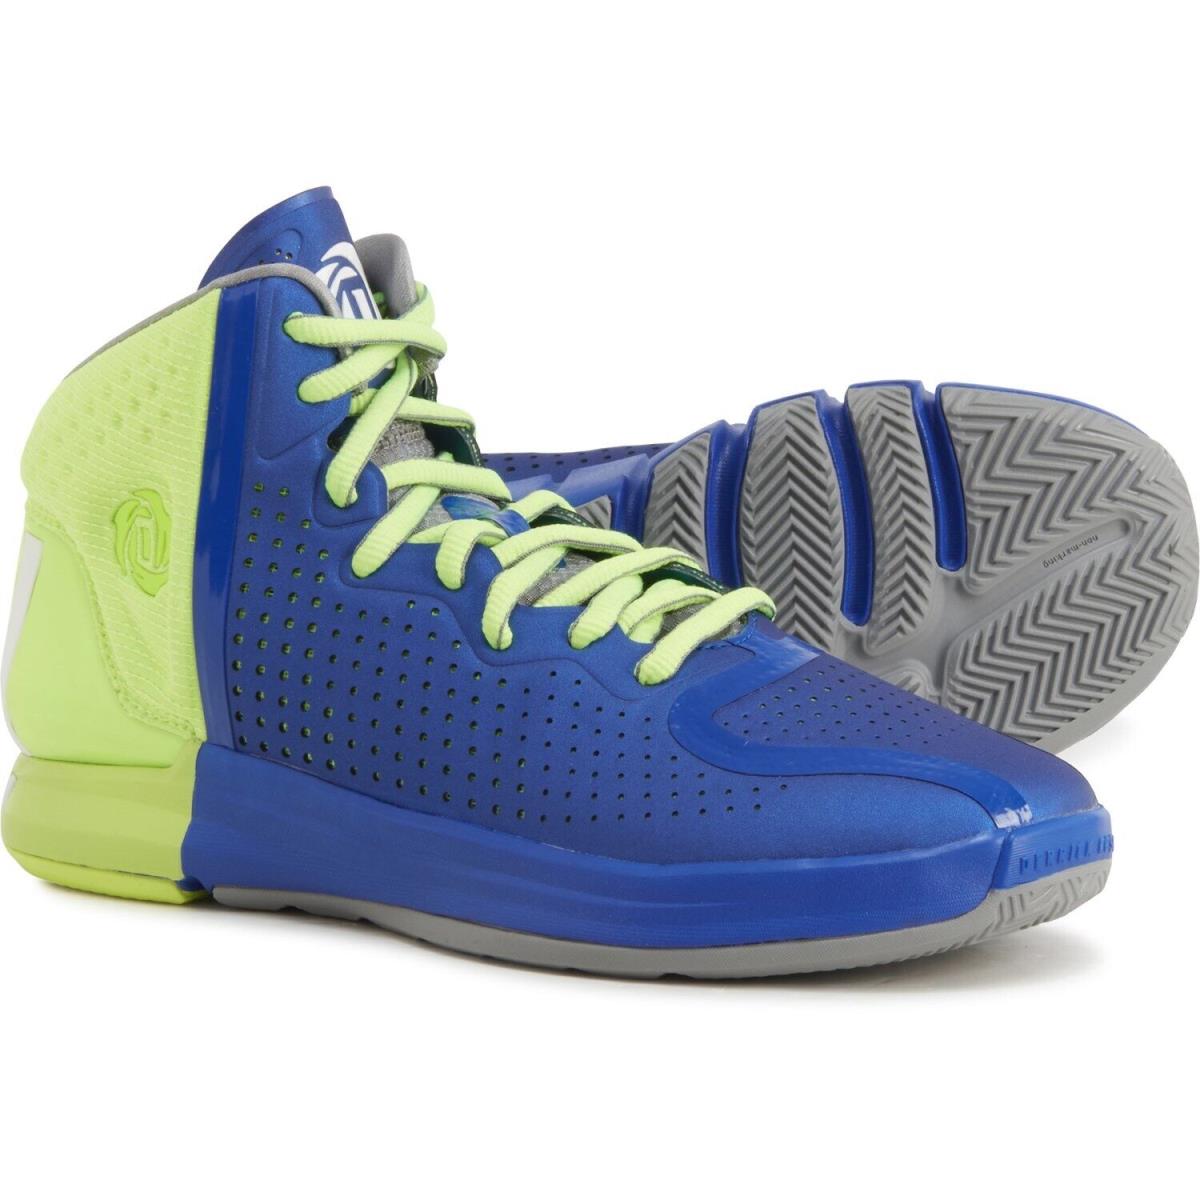 Adidas D Rose 4 Restomod Basketball Shoes For Men Size 10